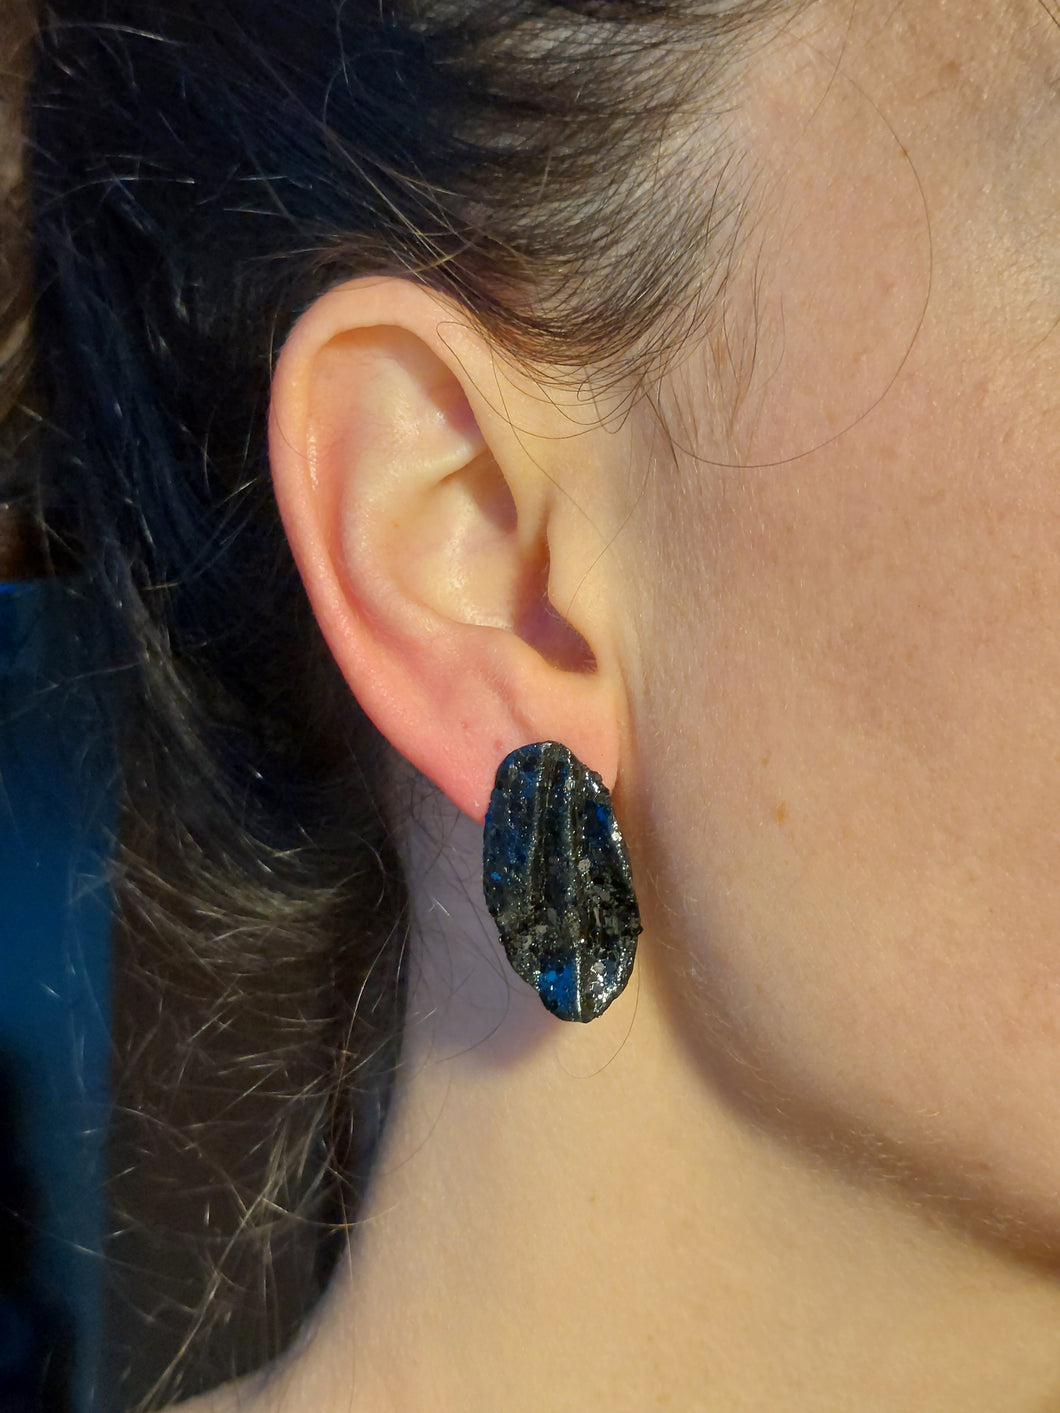 Dúil Black shimmer statement stud earrings | Black earrings | Black jewellery | Polymerclay earrings | Irish made gifts | Irish jewellery | Dúil